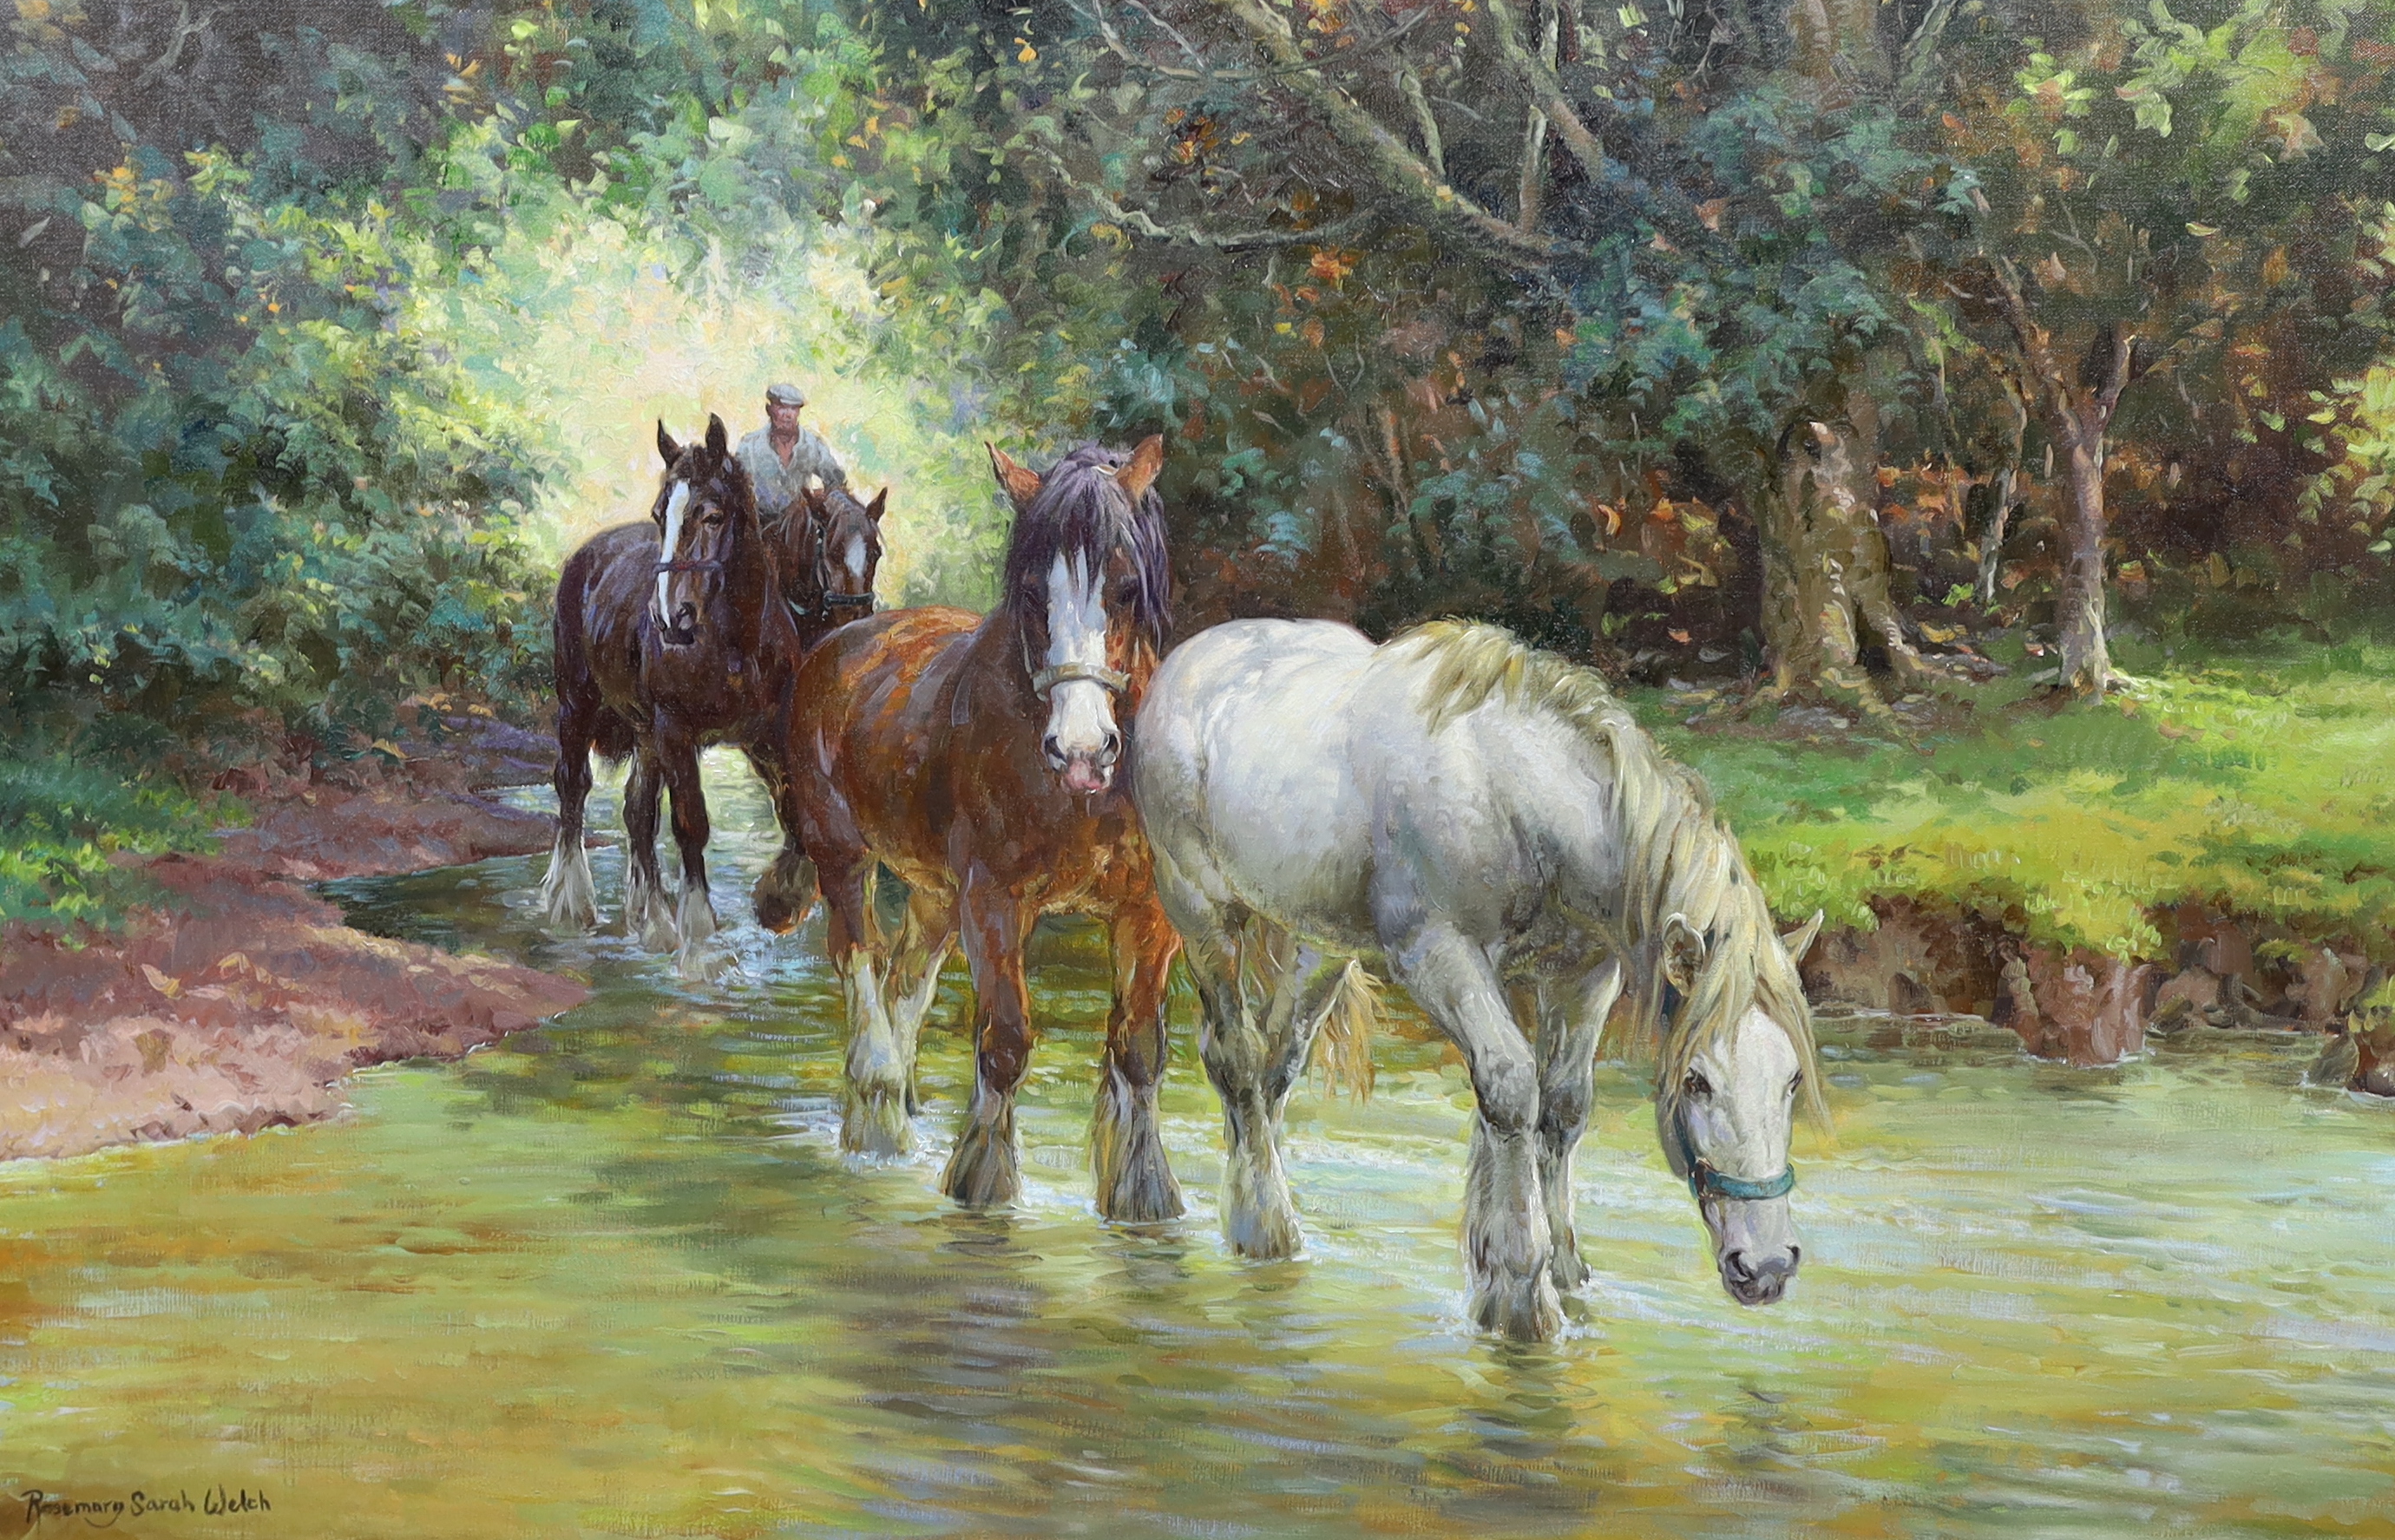 Rosemary Sarah Welch (English, b.1946), Horses crossing a stream, oil on canvas, 65 x 100cm, unframed